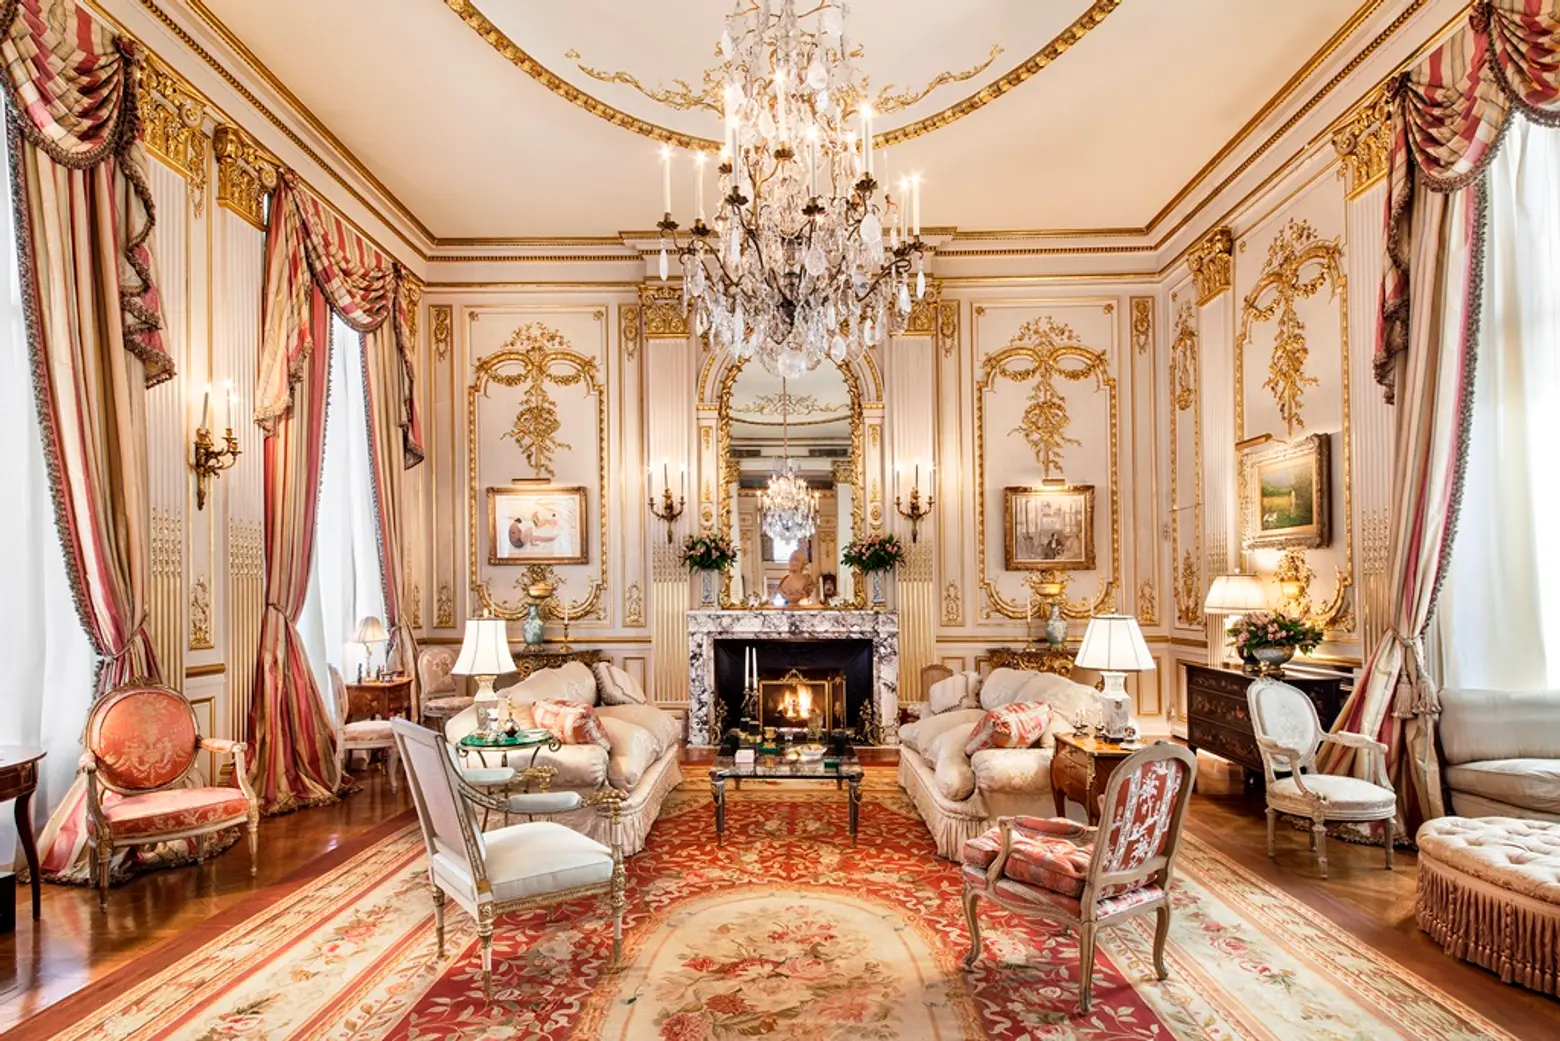 Saudi Prince Is New Owner of Joan Rivers’ Lavish Penthouse, Will Undertake a Gut Renovation